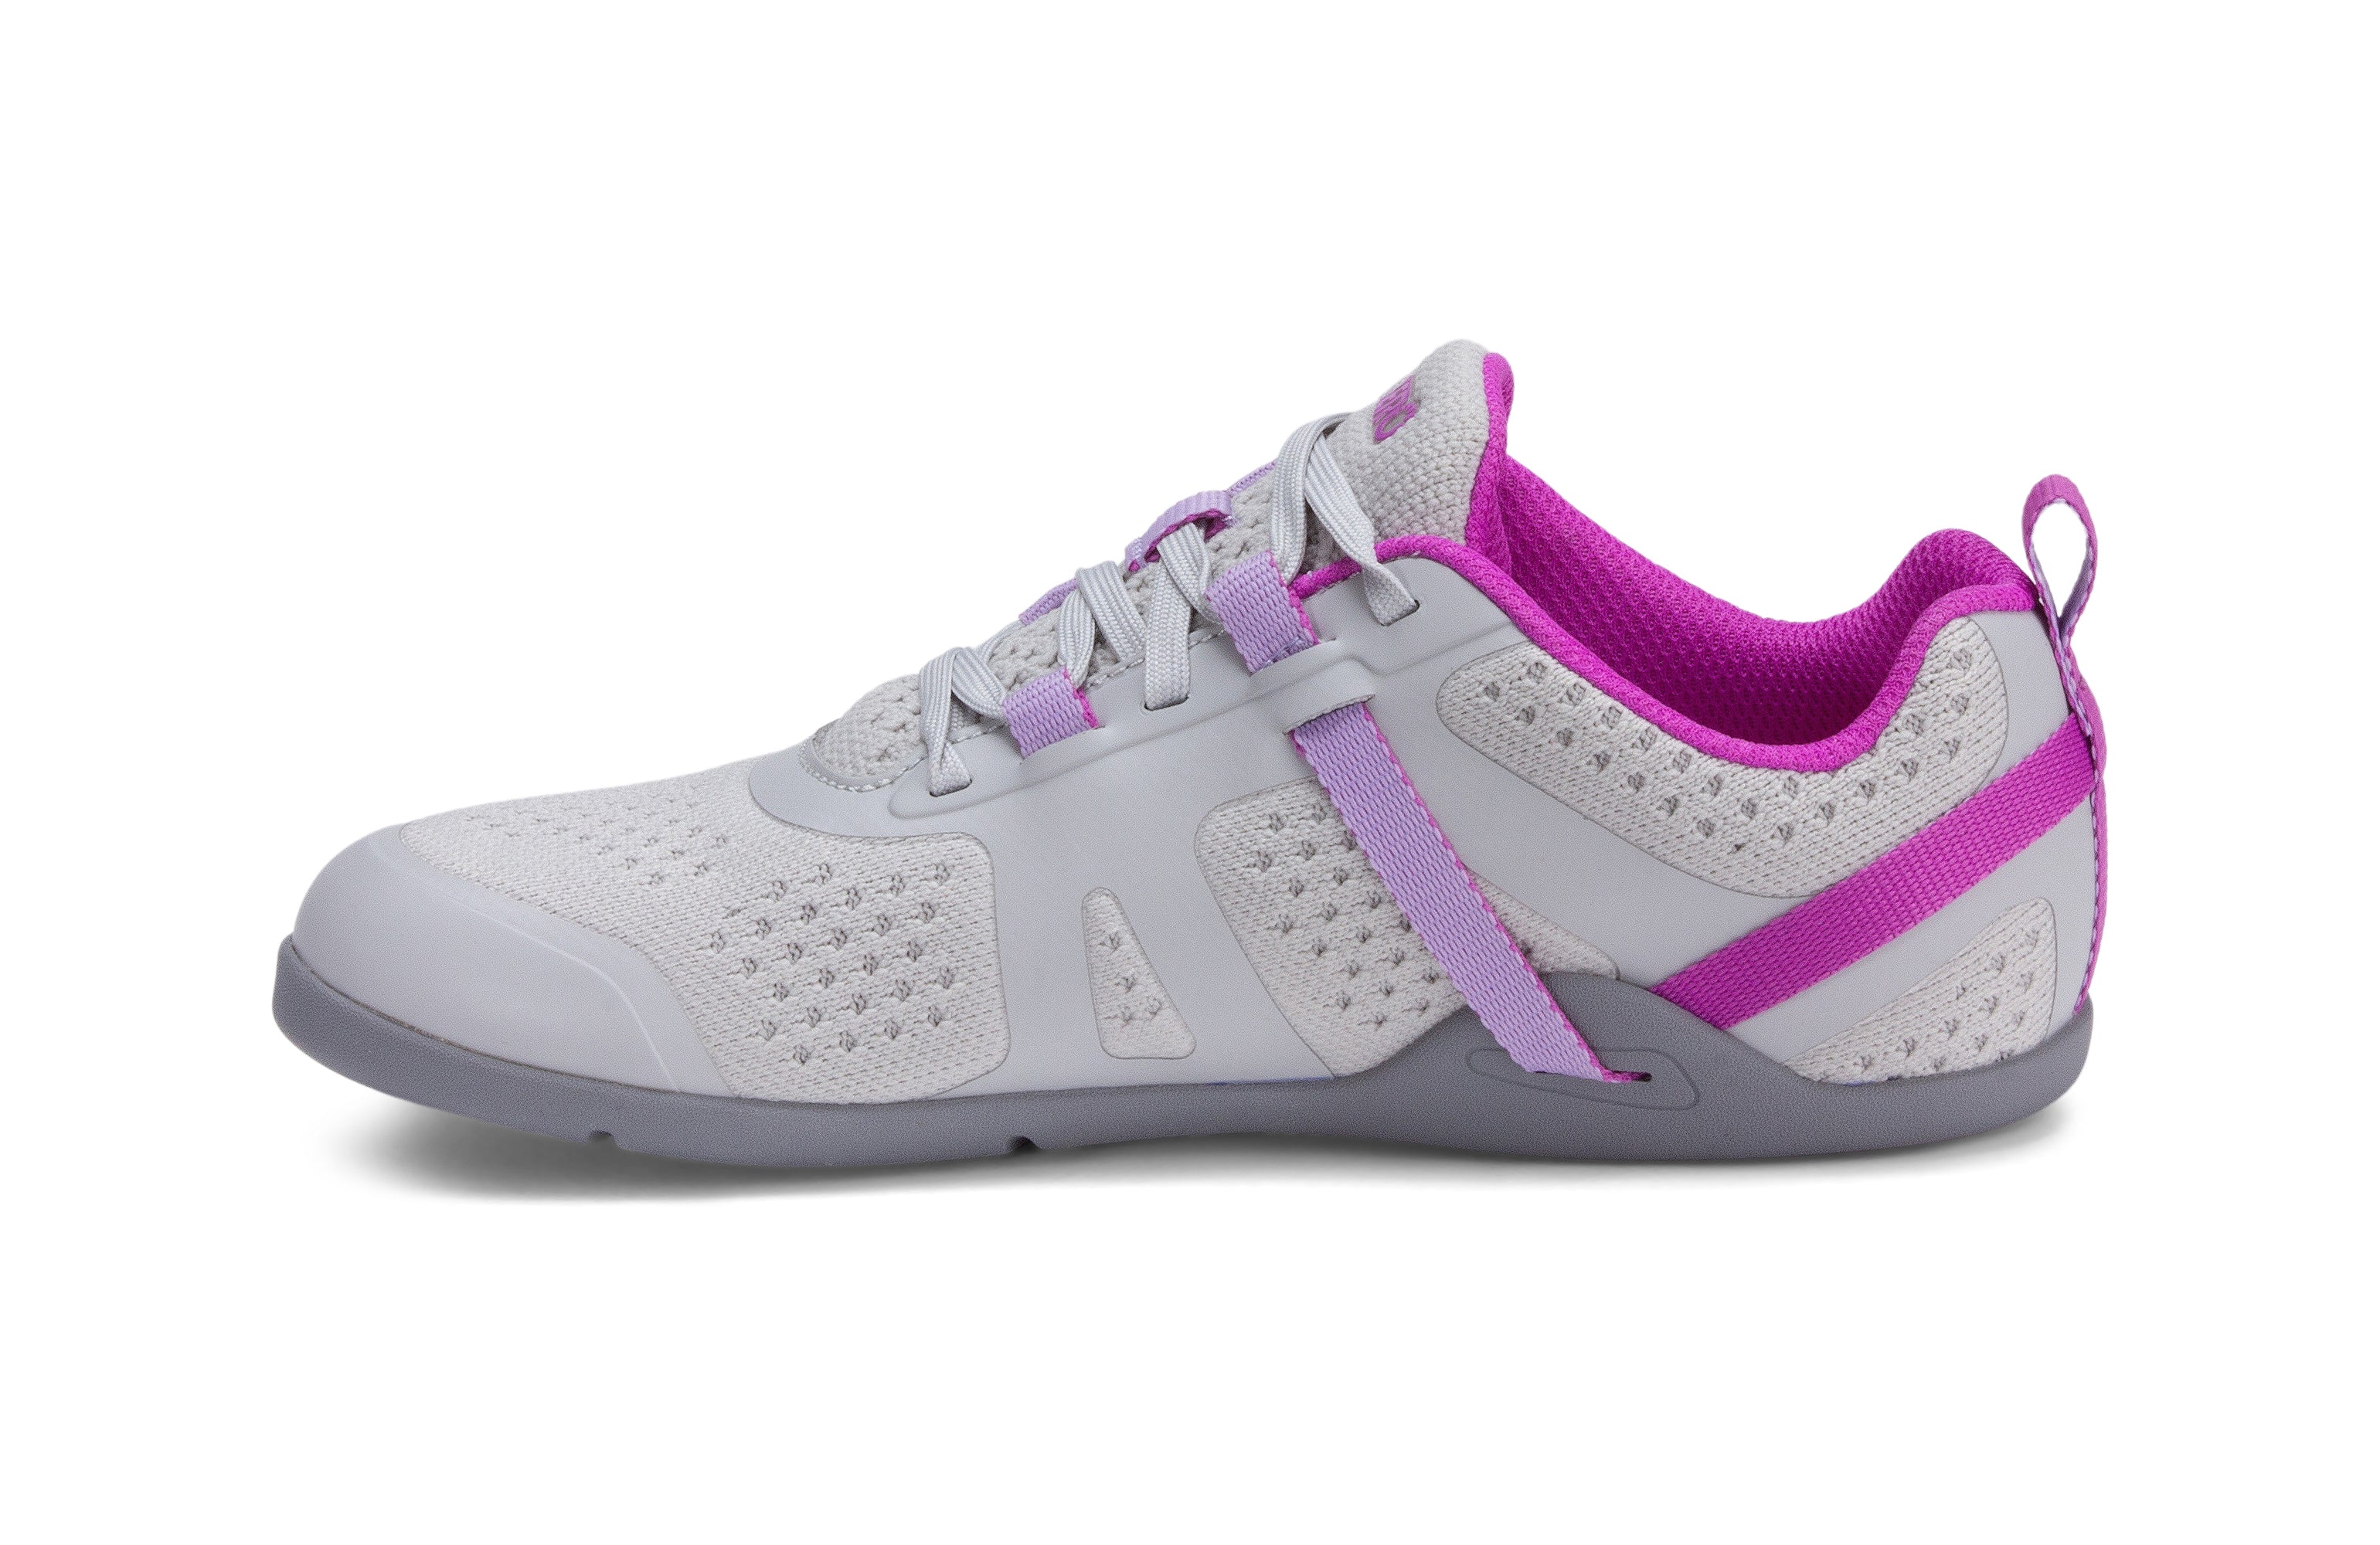 Xero Shoes Prio Neo Womens barfods athleisure trainer til kvinder i farven storm, inderside